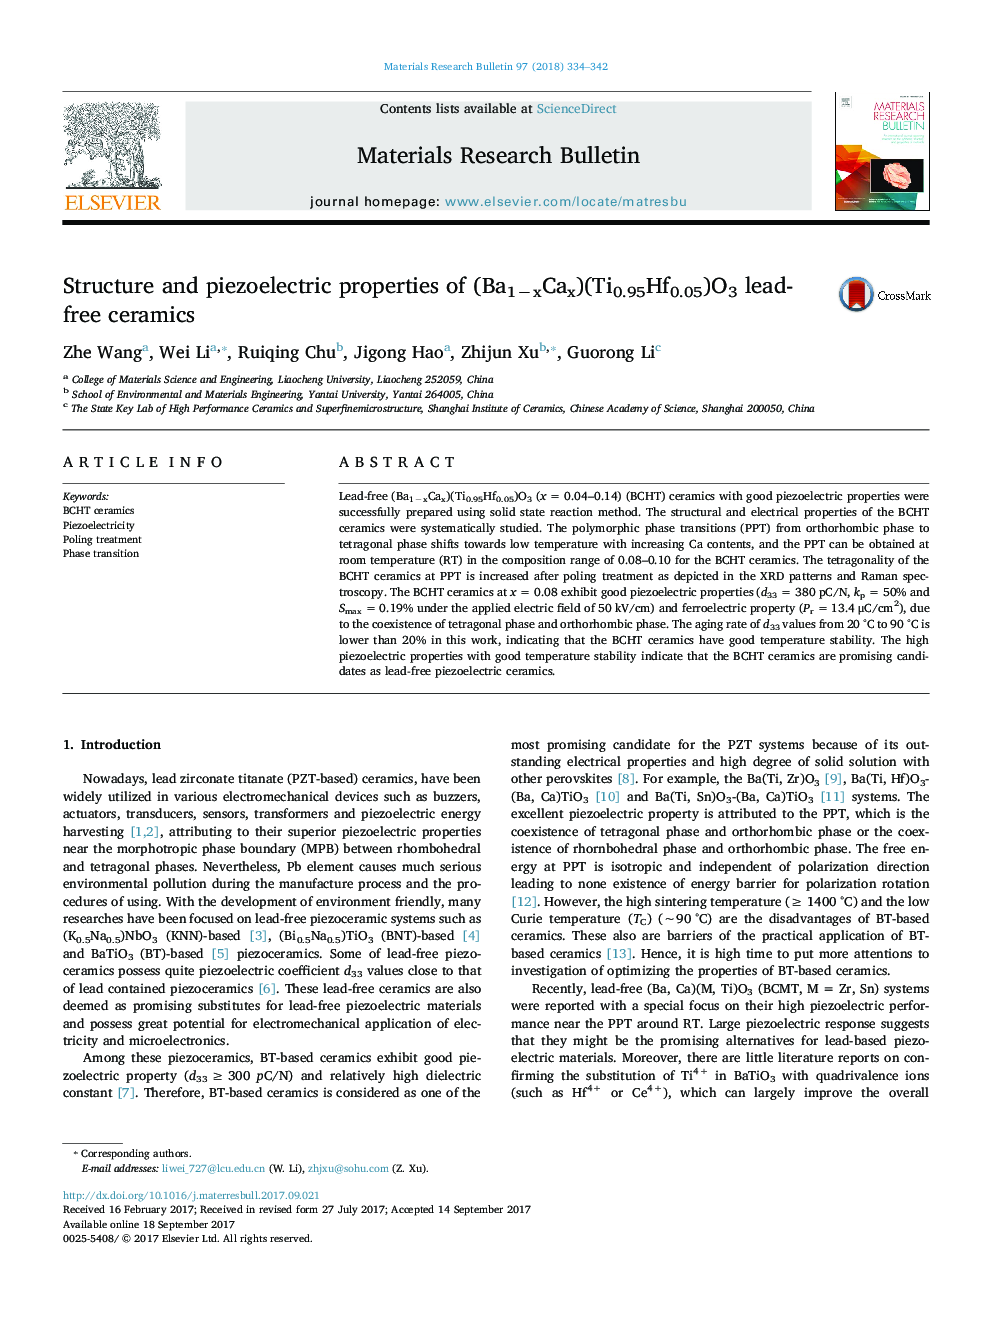 Structure and piezoelectric properties of (Ba1âxCax)(Ti0.95Hf0.05)O3 lead-free ceramics